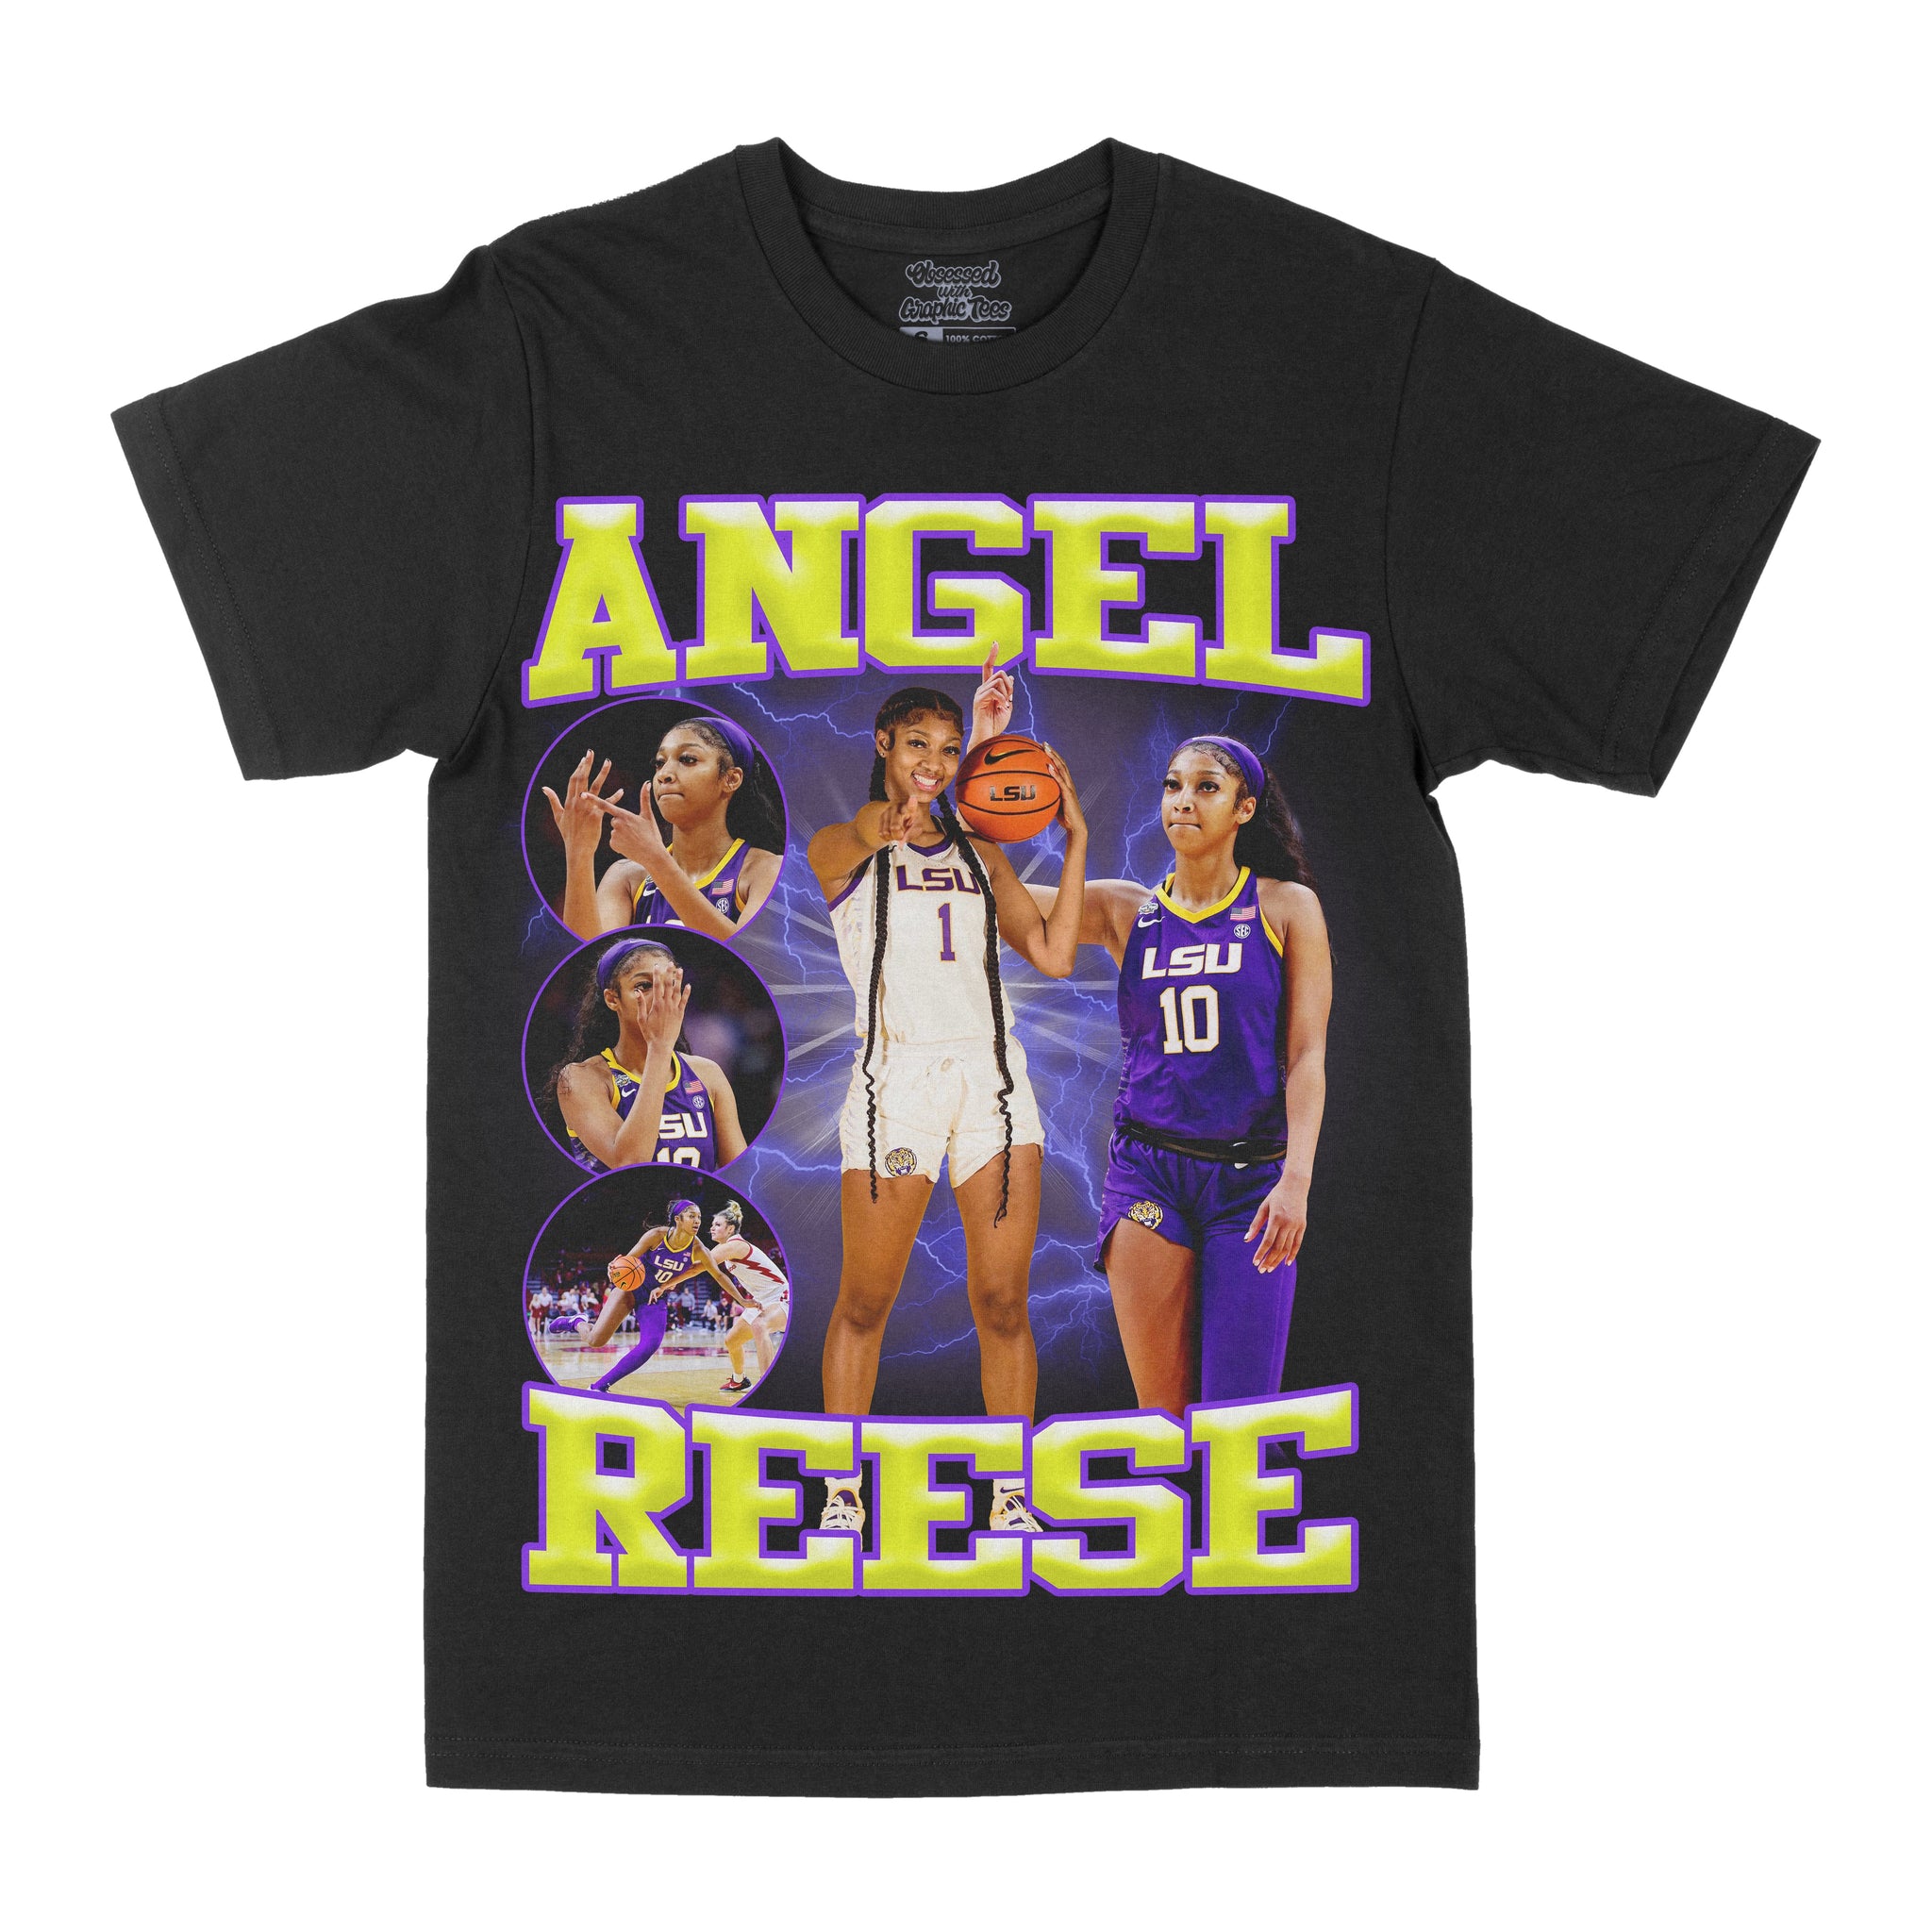 Angel Reese Graphic Tee